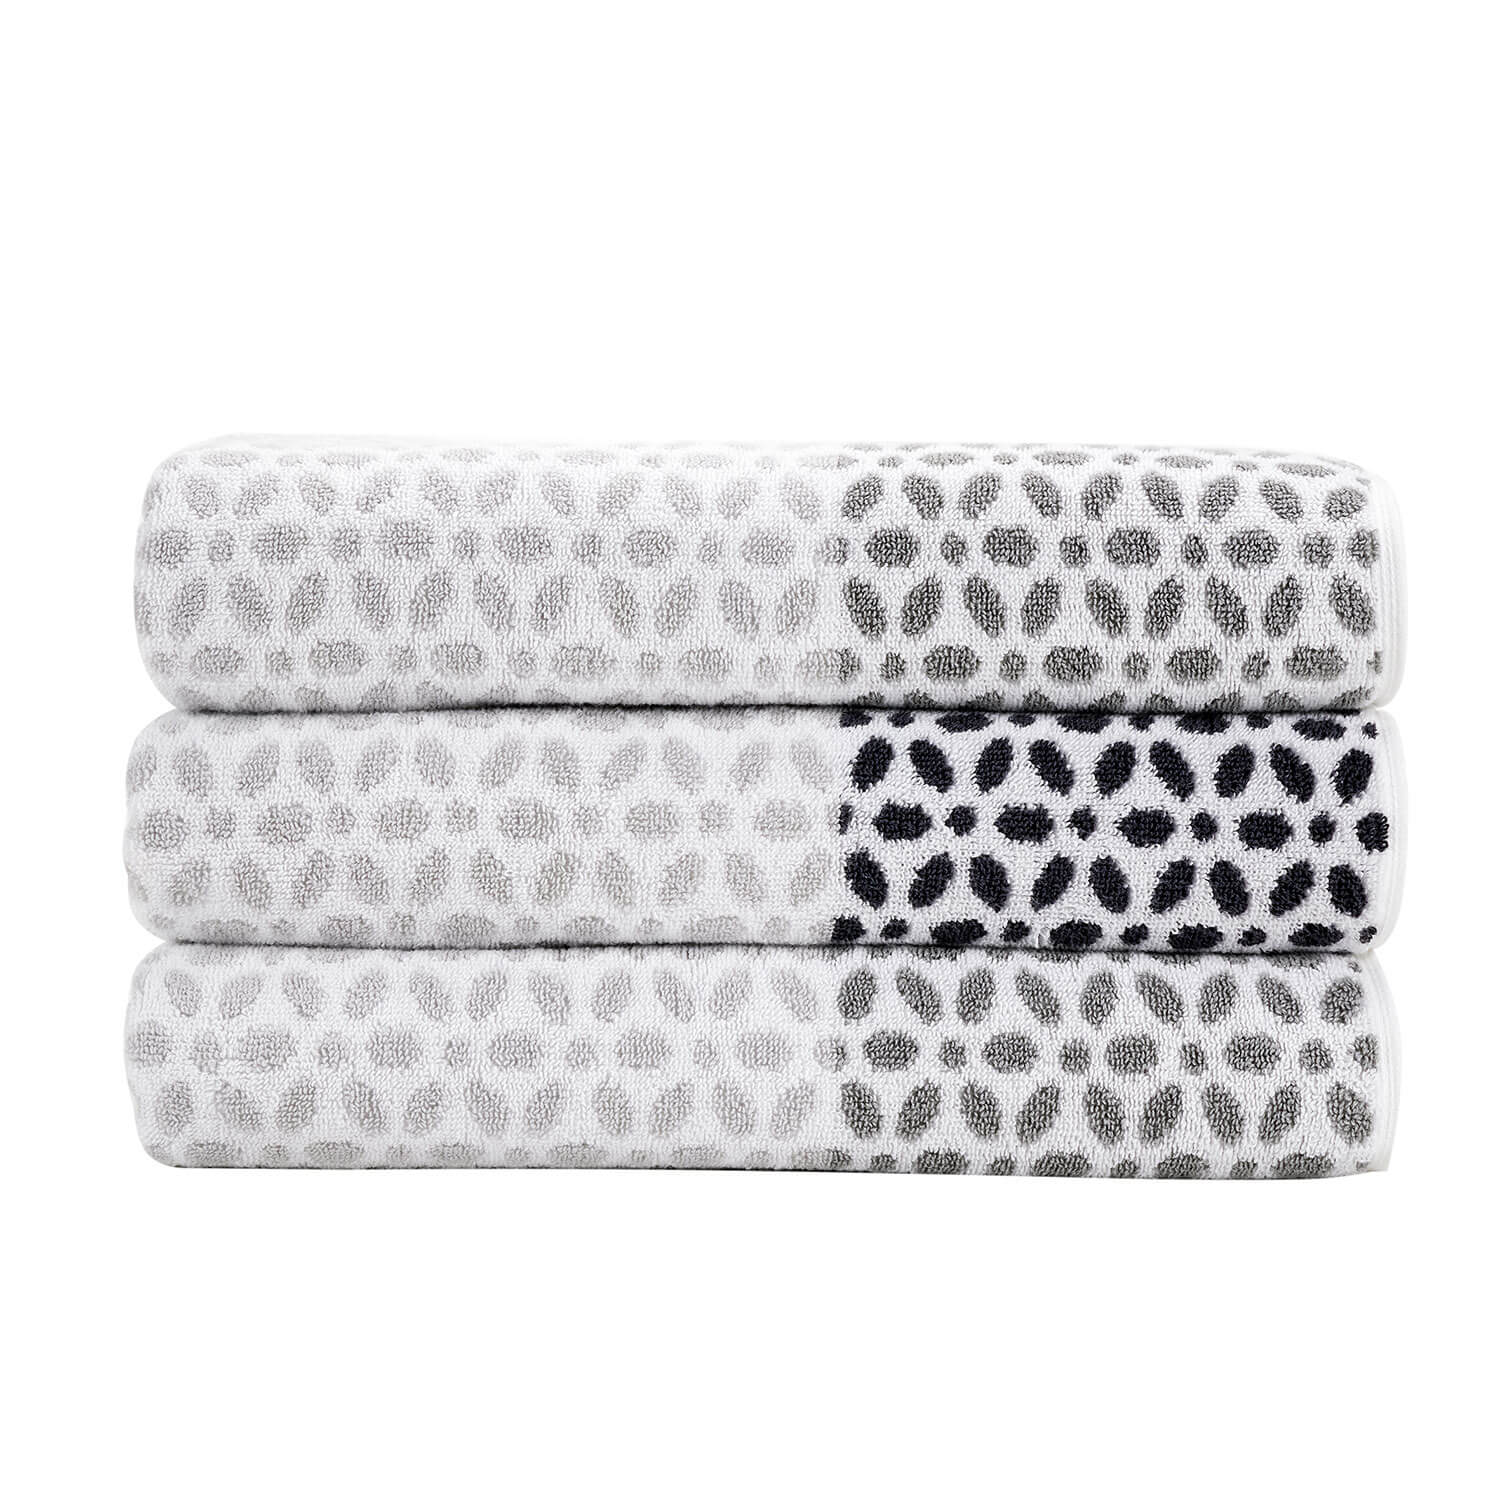 Christy Midori Bath Towel - Grey 1 Shaws Department Stores